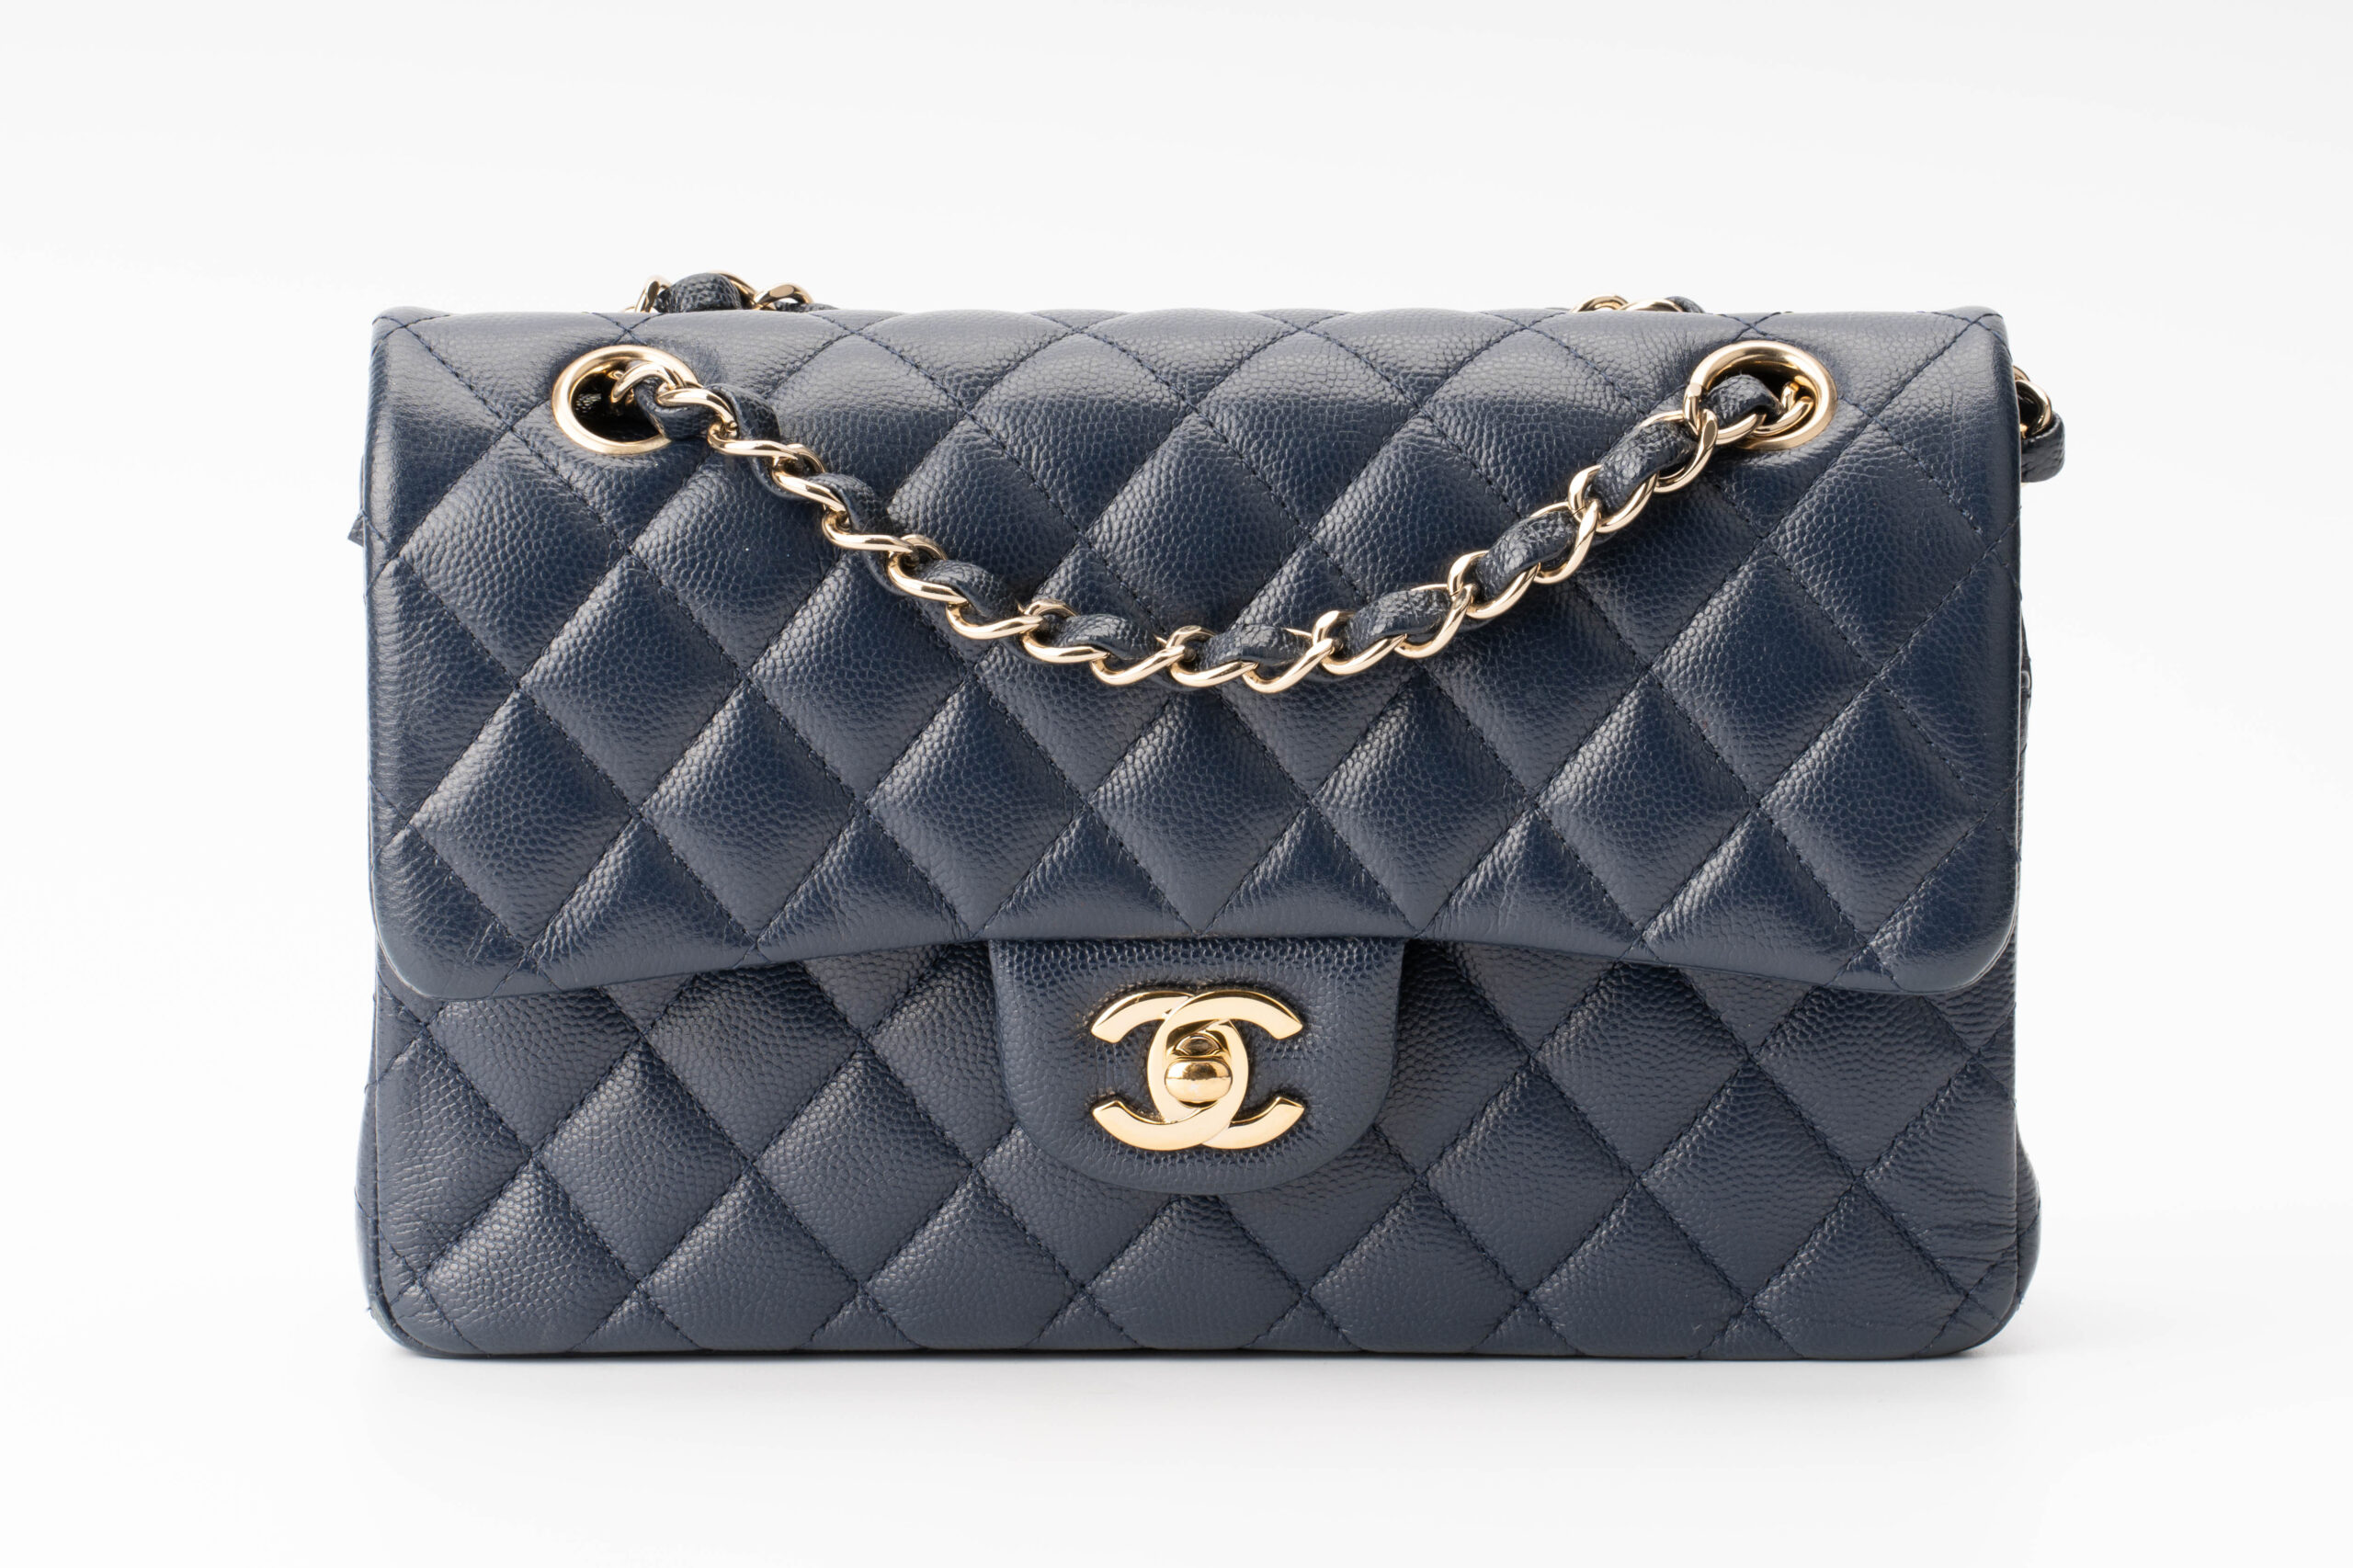 Chanel Small Classic Flap Bag Caviar Navy Blue - Luxury Shopping